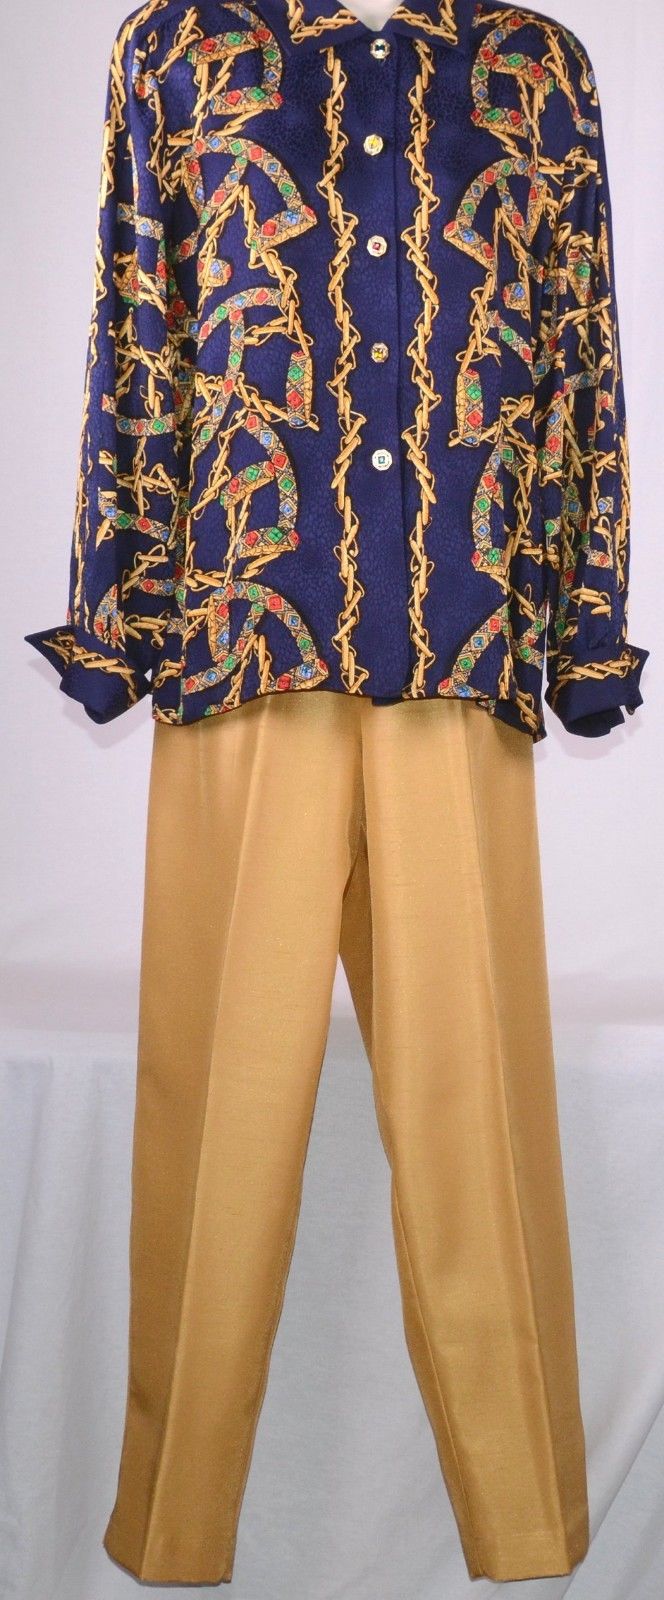 Designer ADRIANNA PAPE'LL 2PC  Navy & Gold Pants Outfit 100% Silk Women Sz 12